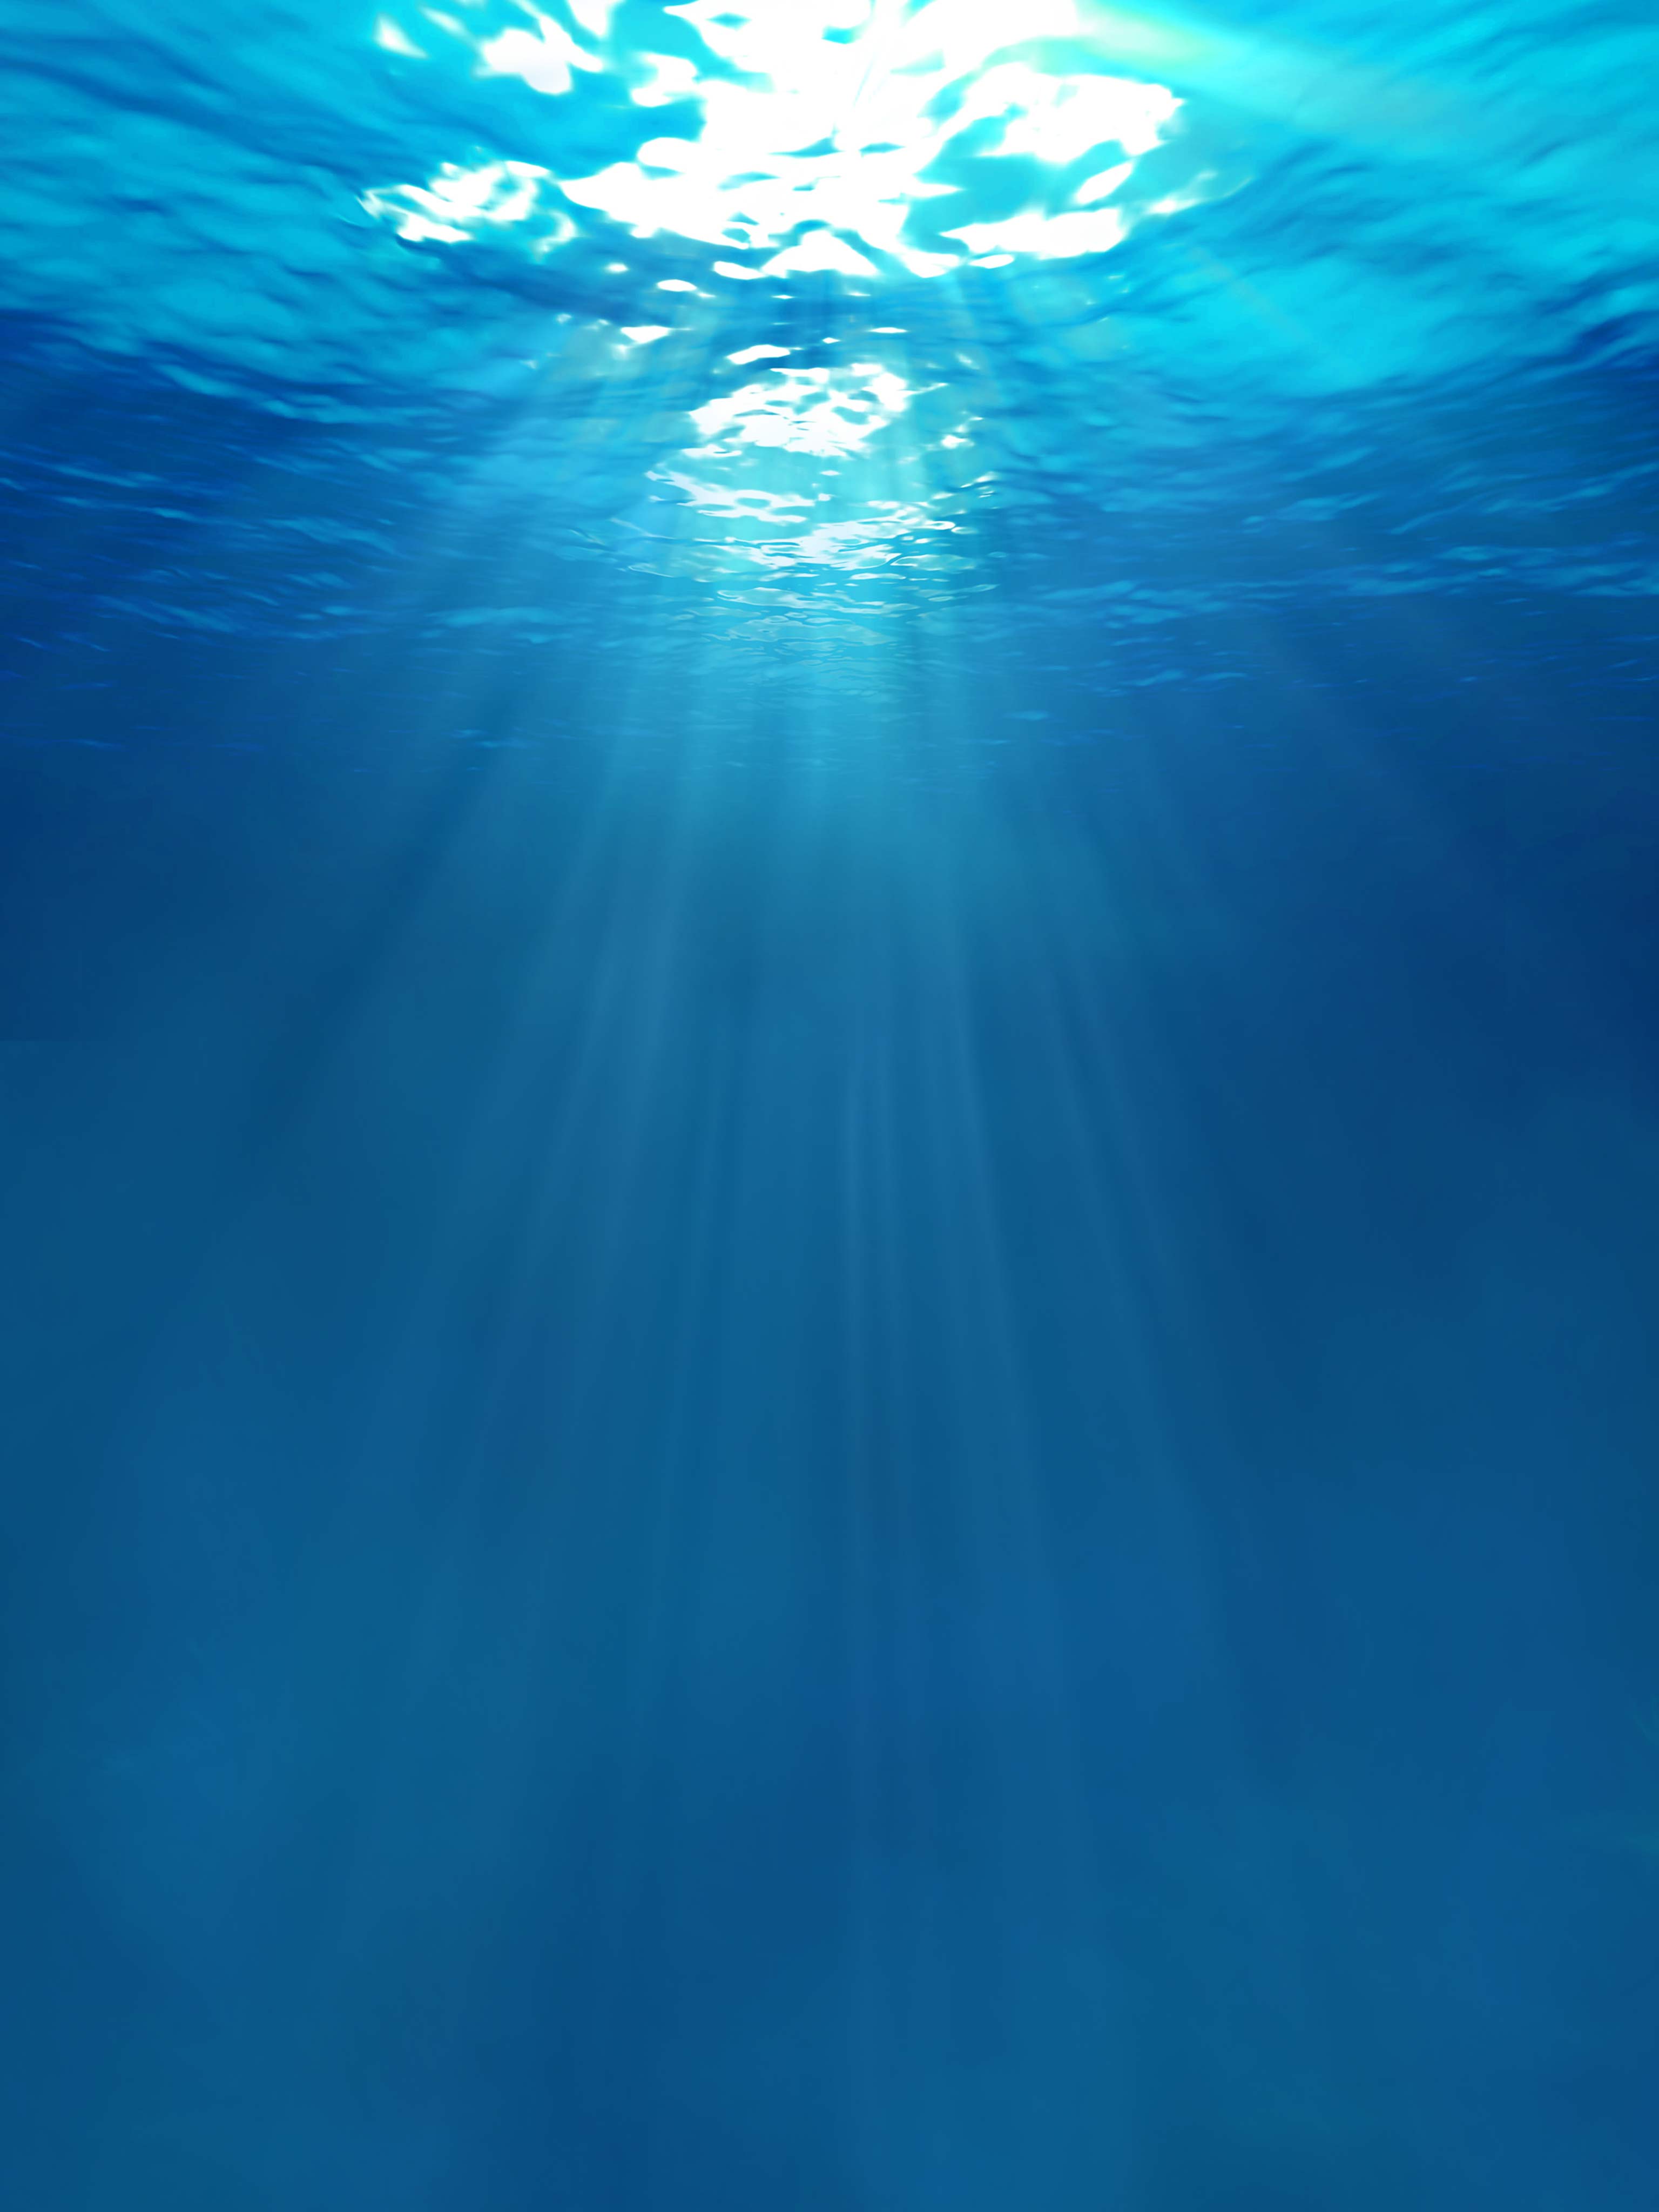 Download Underwater Sun Rays Mobile Wallpaper - Underwater Sun Rays On ...